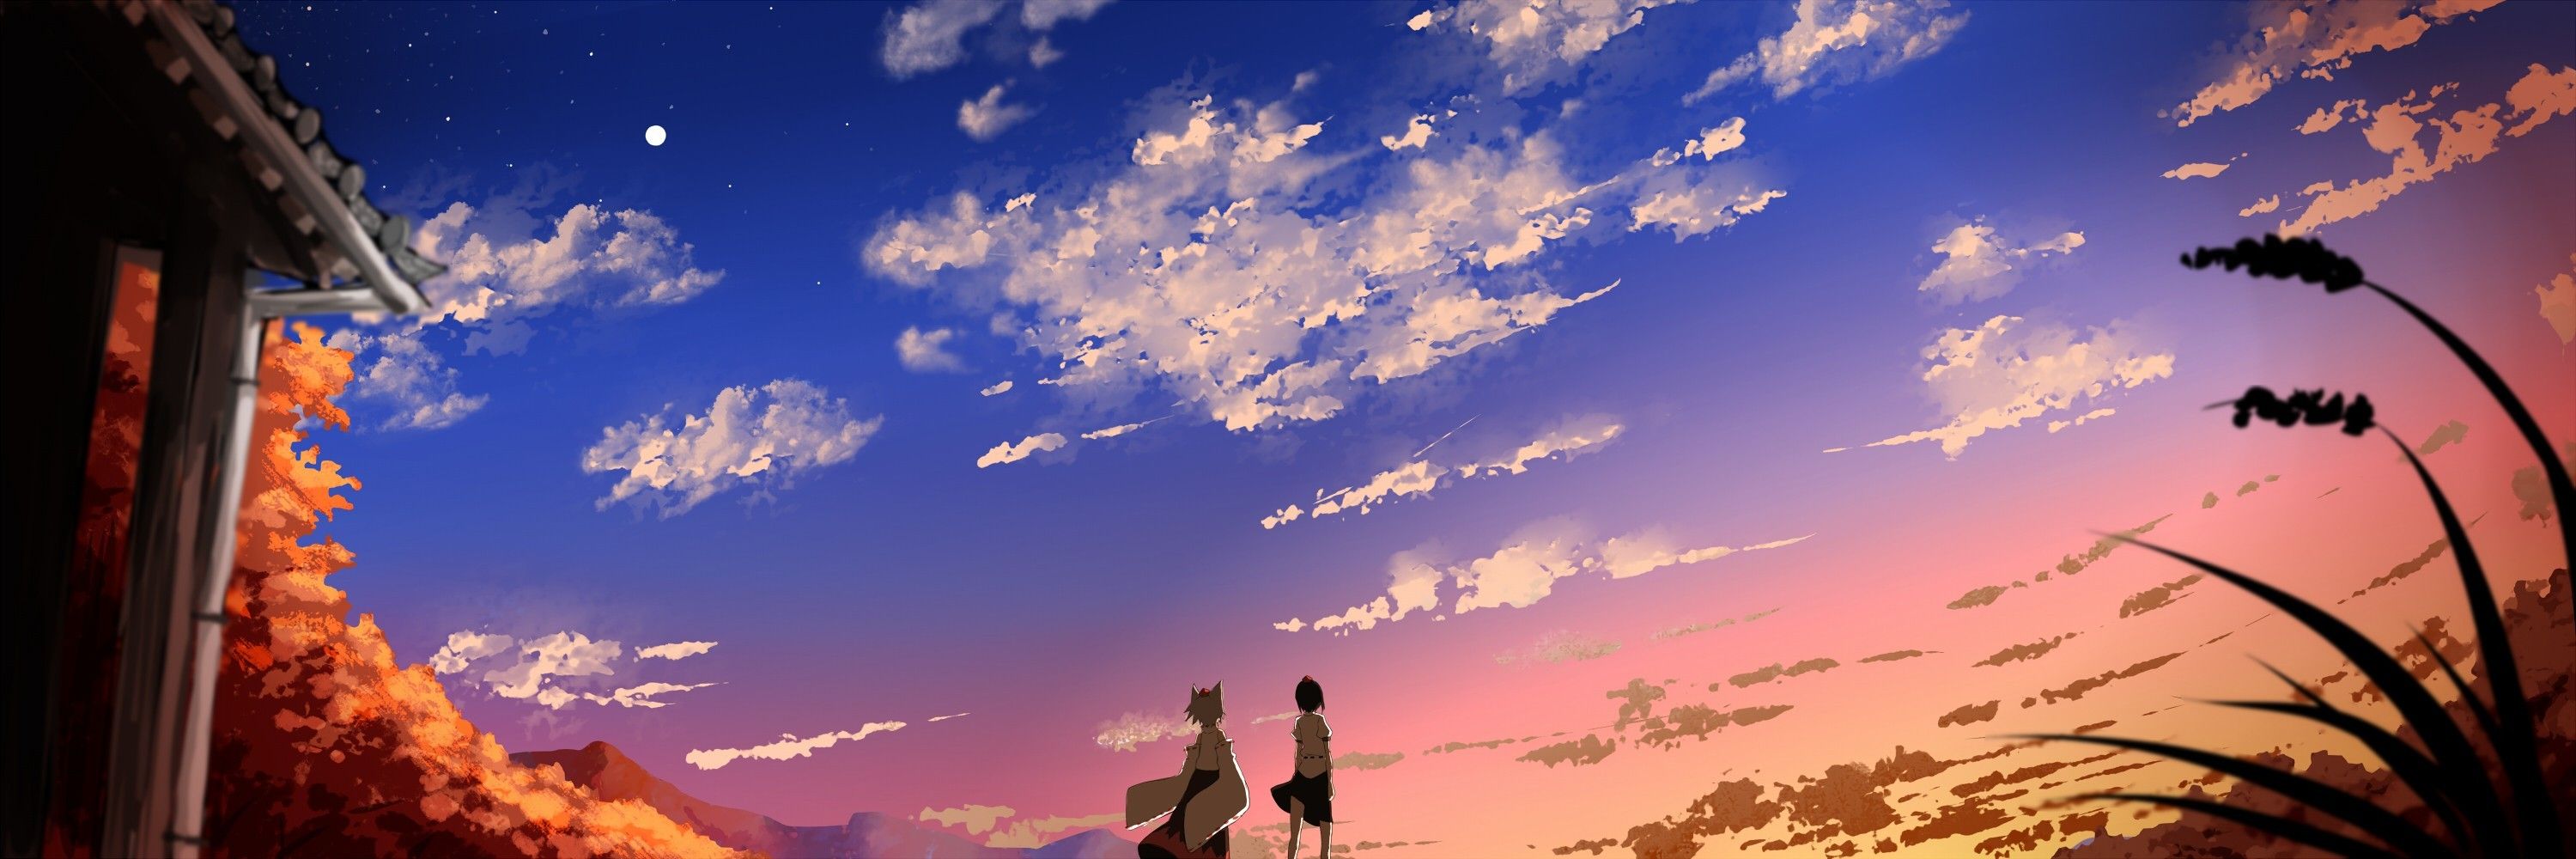 iPhoneXpapers.com | iPhone X wallpaper | bl74-art-girl-sunset-anime